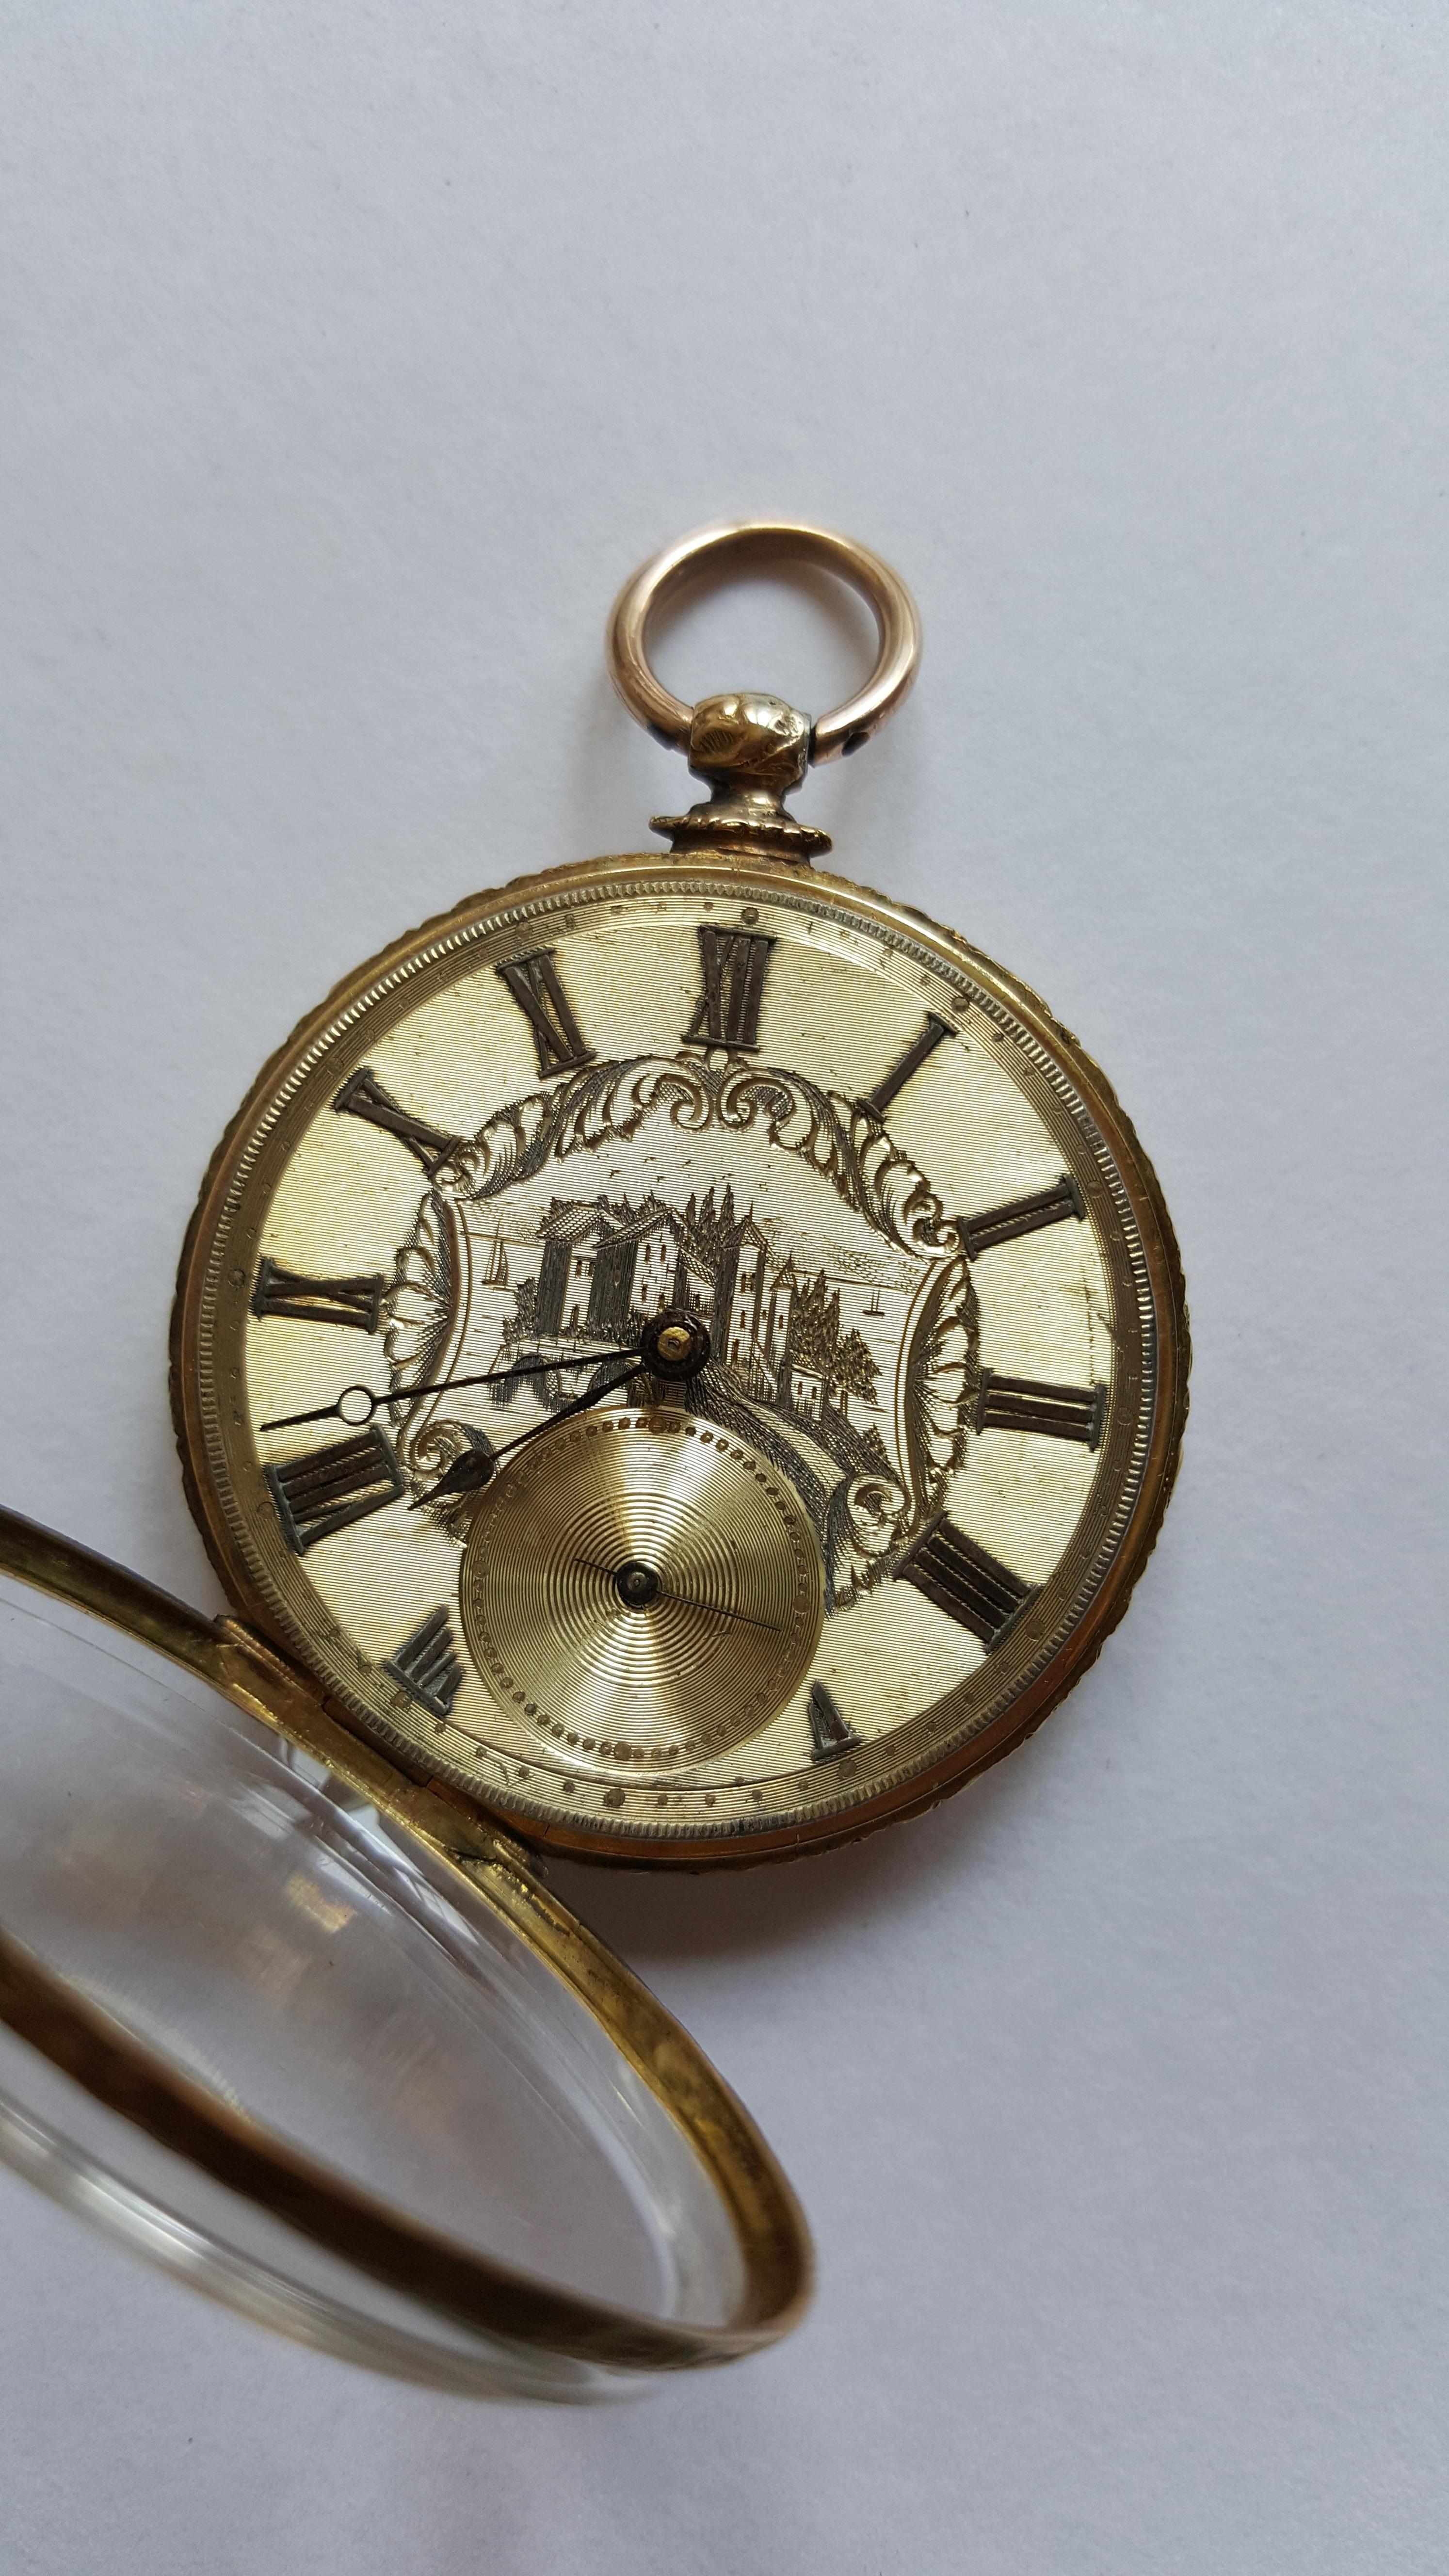 19th century watch